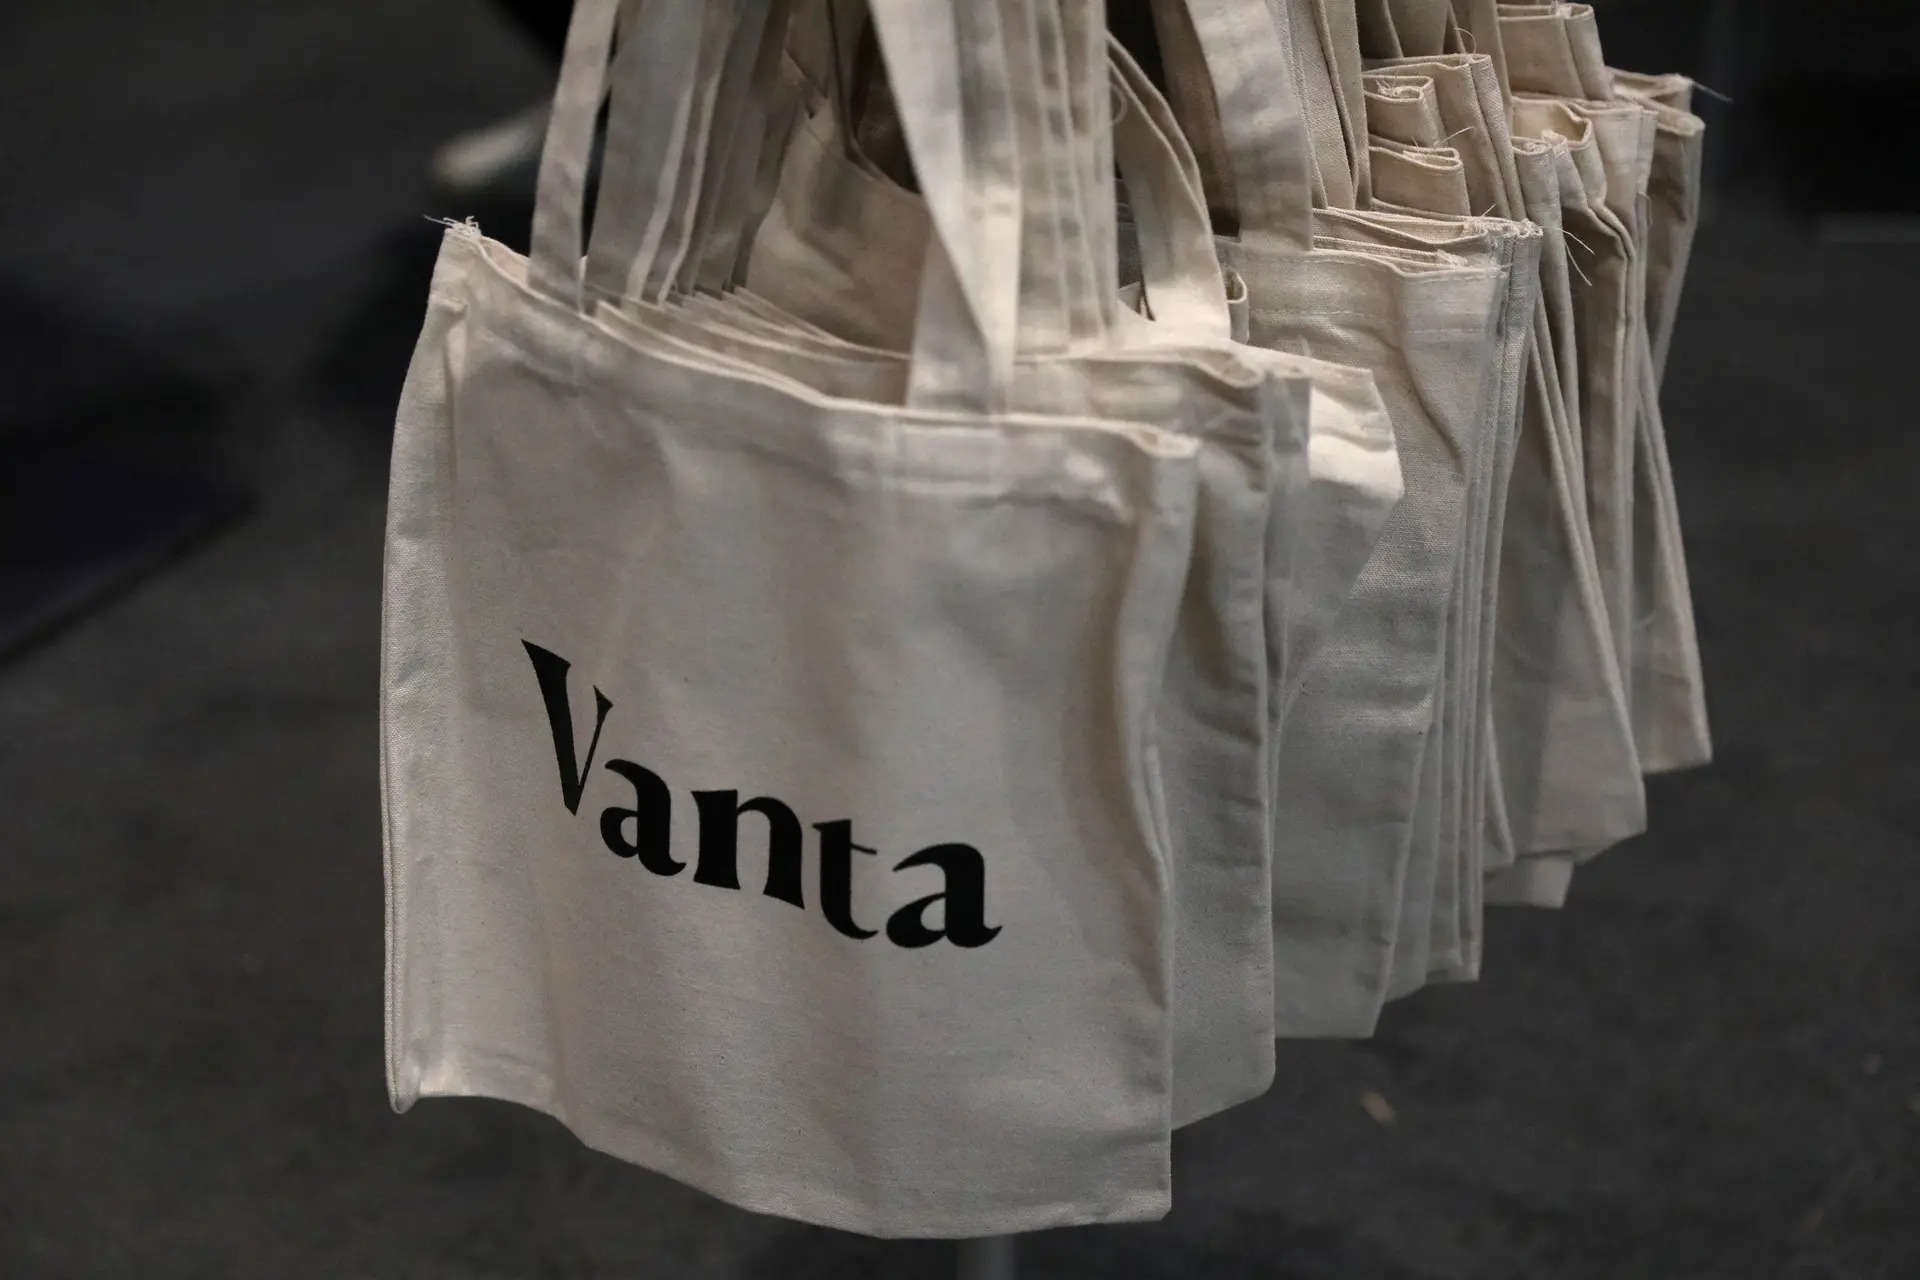 Sequoia Capital-backed Vanta raises funding at $2.45 billion valuation 